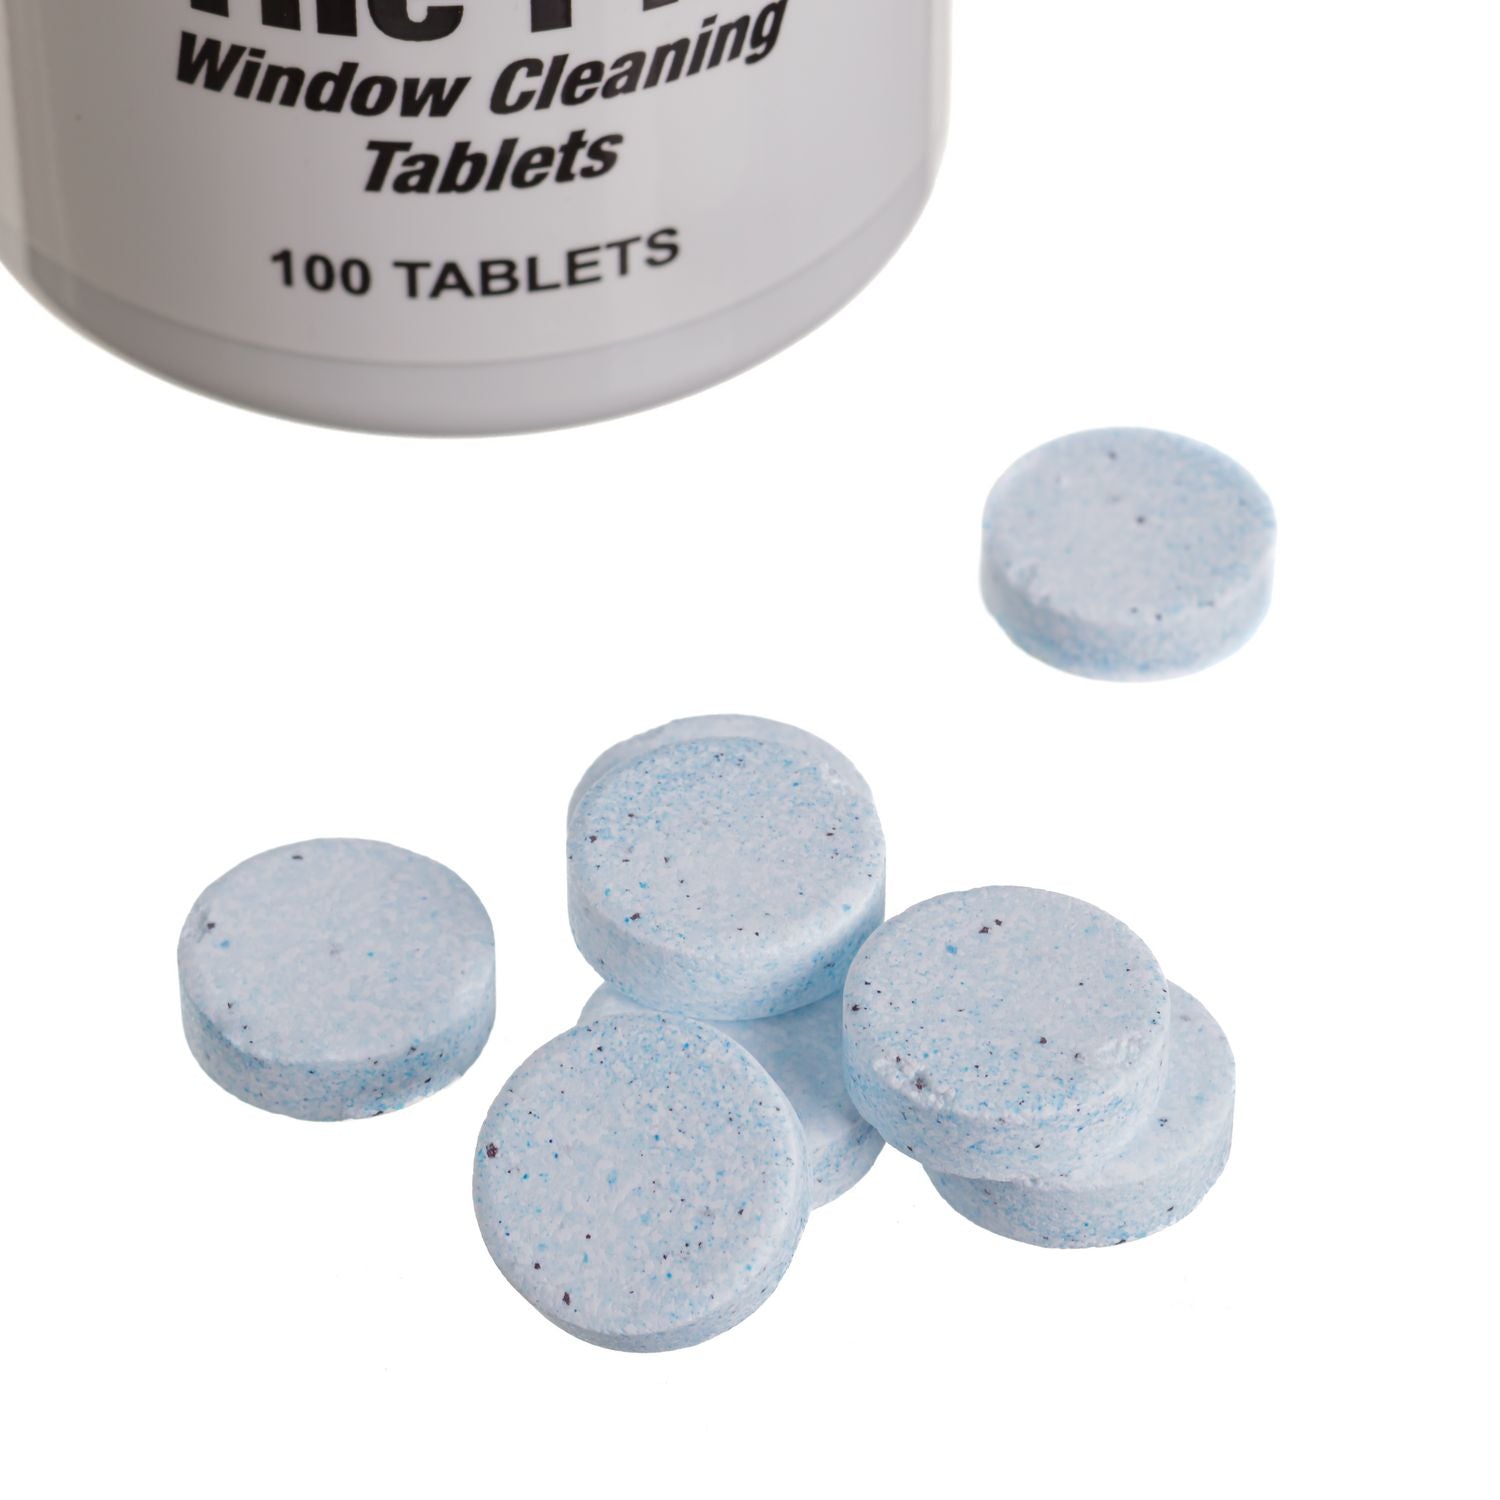 pill-window-cleaning-tablets-100-bottle-12-carton_ungplbtl - 3